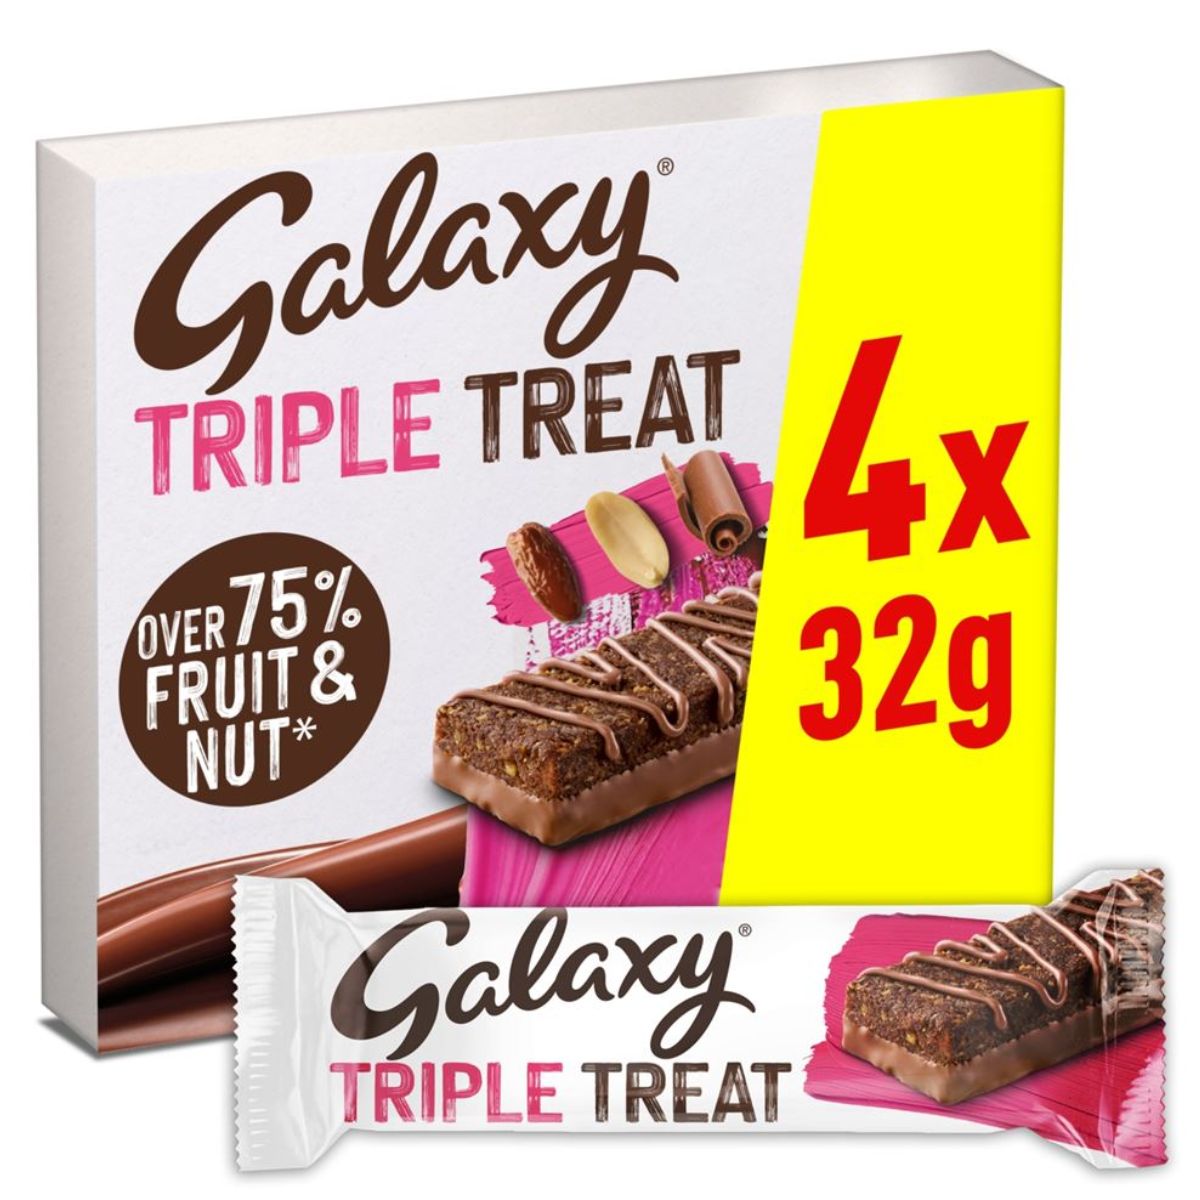 Galaxy - Triple Treat Fruit & Nut Milk Chocolate Snack Bars - 4x32g in a box.